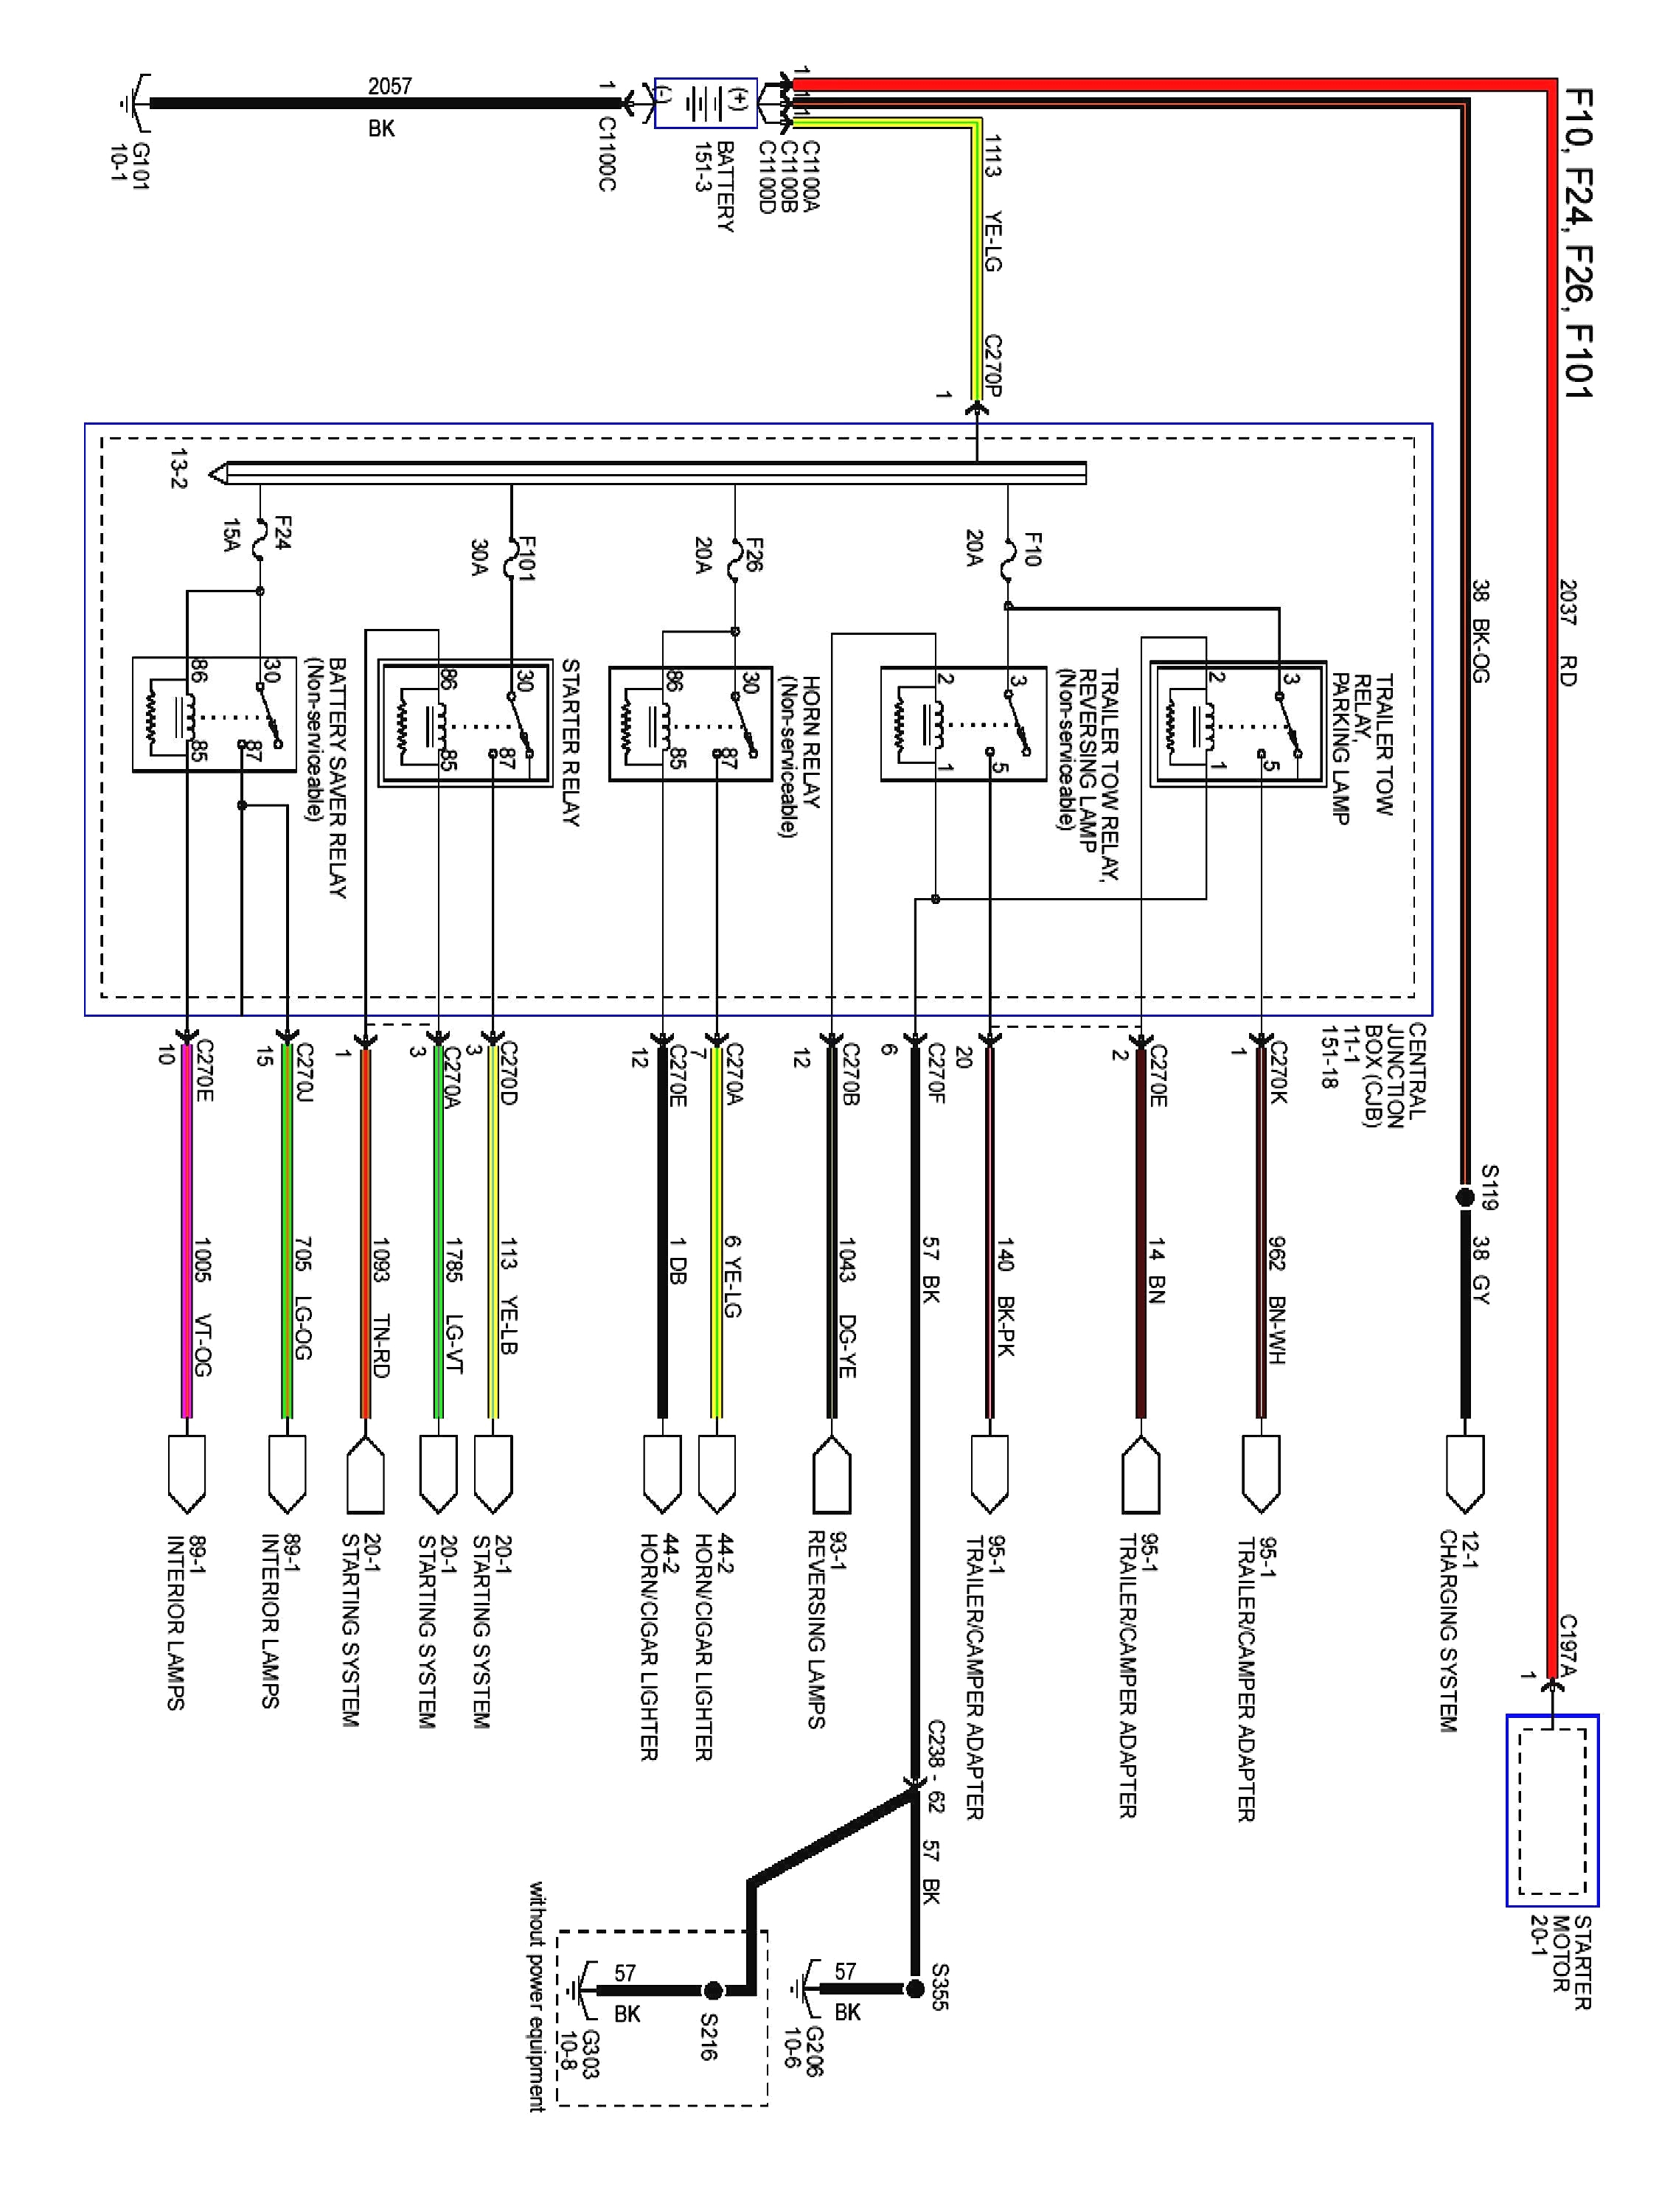 wiring diagram 2000 national tropical wiring diagrams posts 2000 f150 spark plug wiring diagram free download